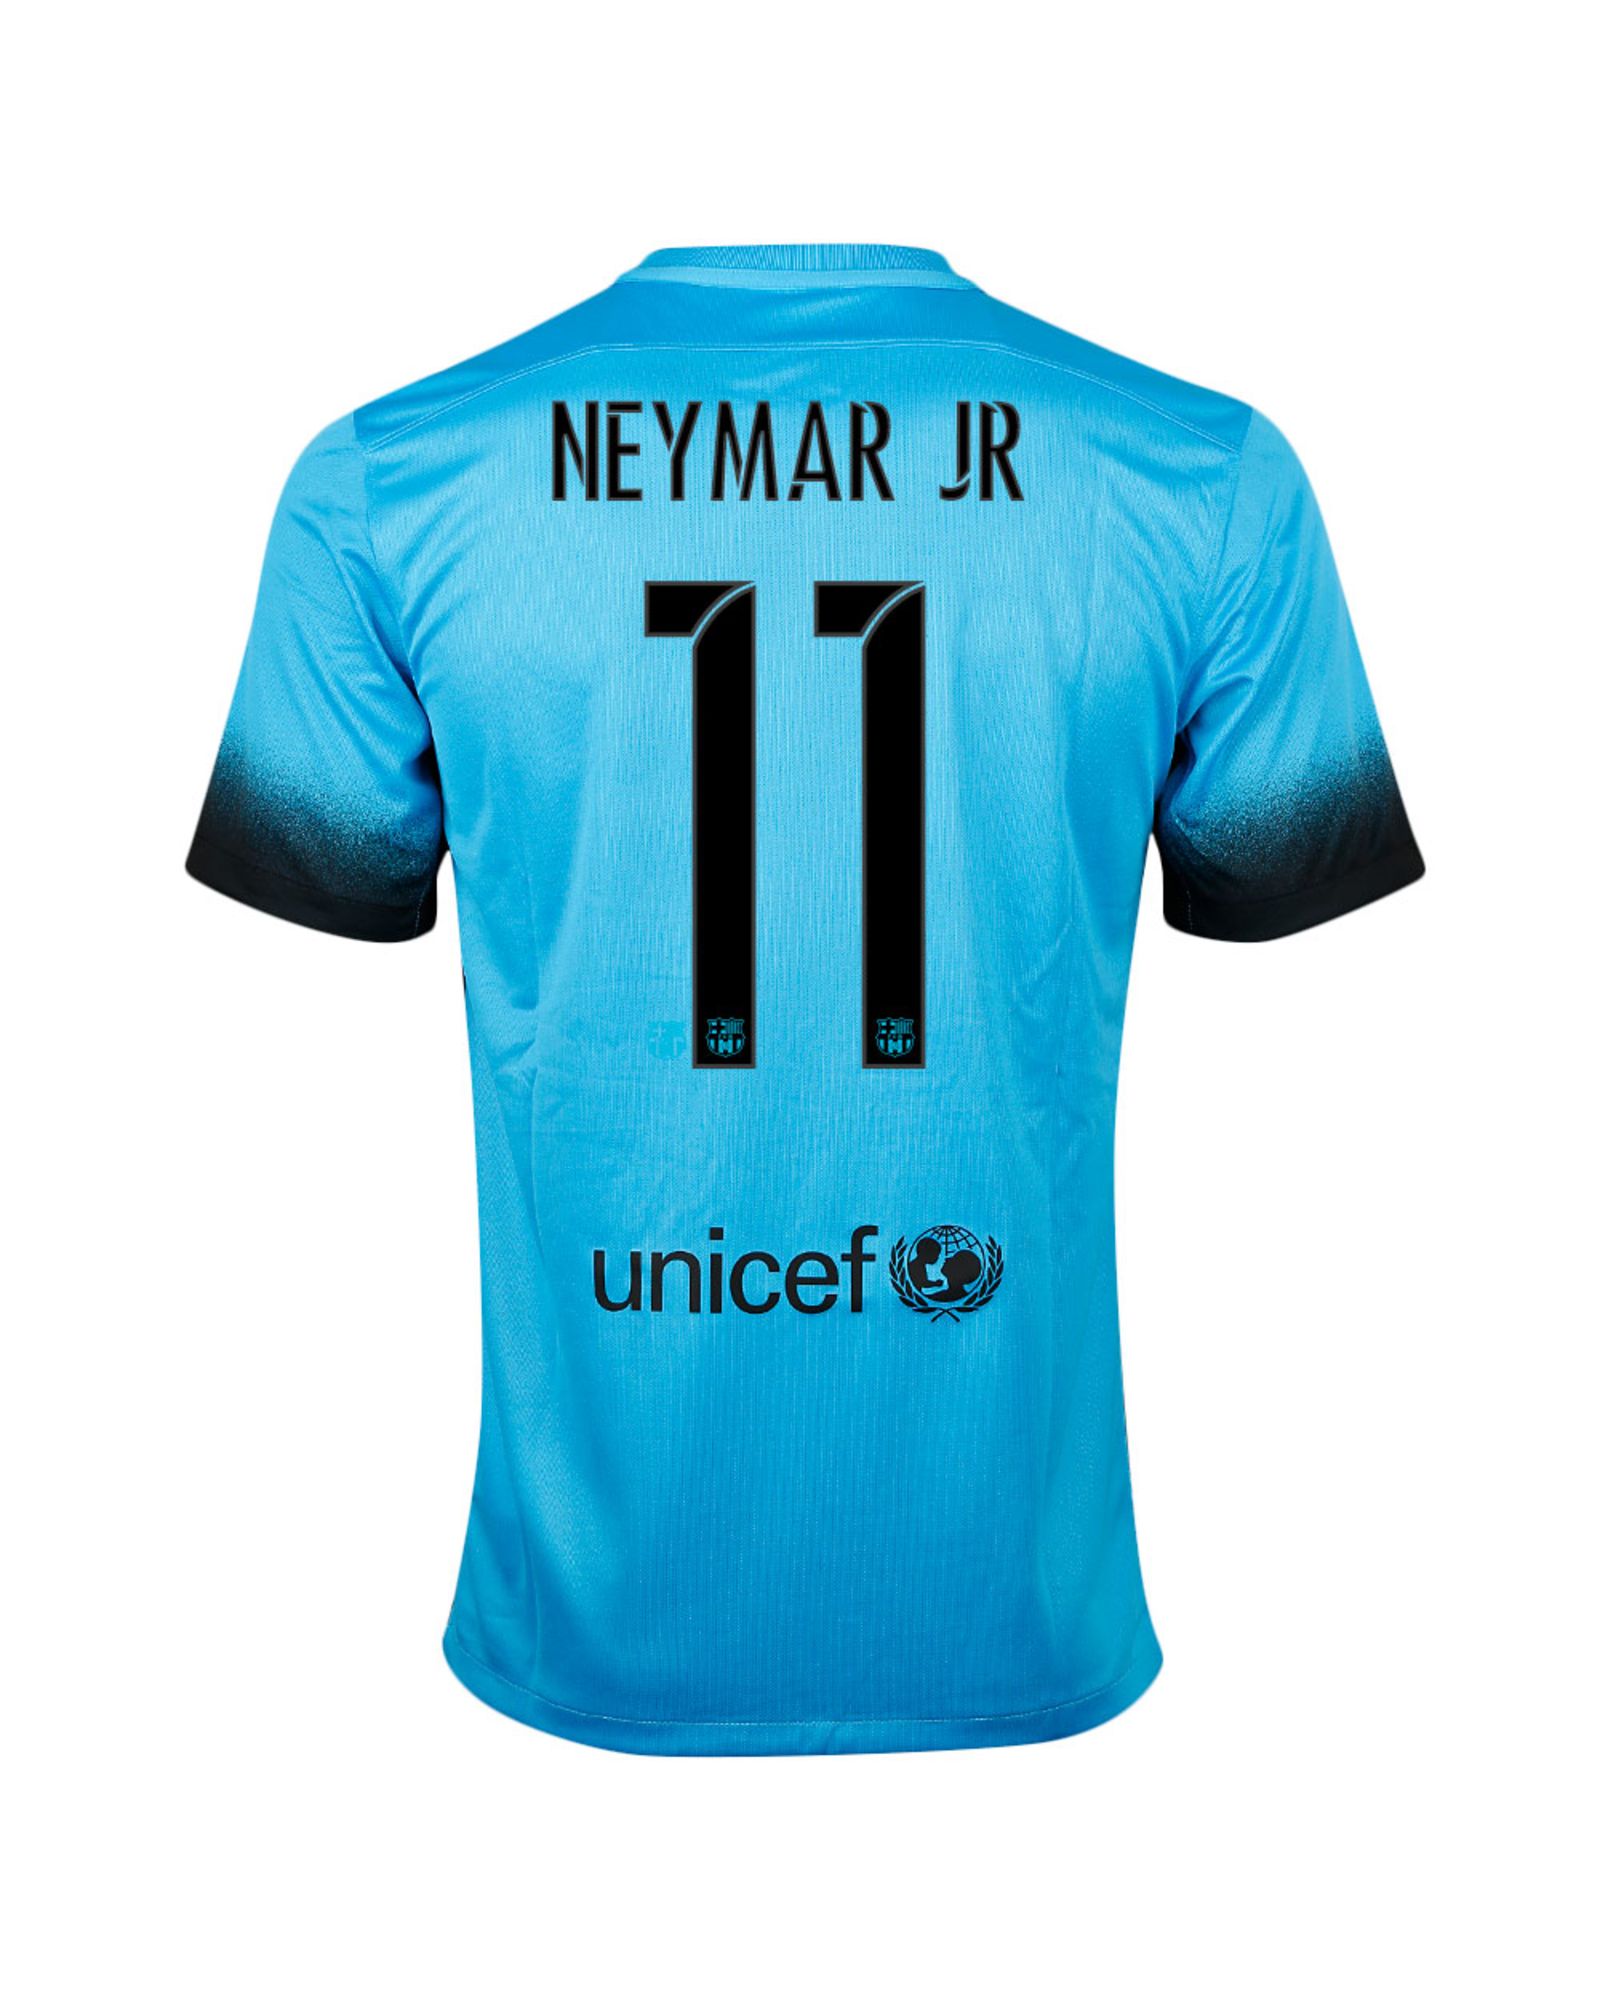 Ondular Cita célula Camiseta 3ª FC Barcelona 2015/2016 Neymar JR UCL Azul